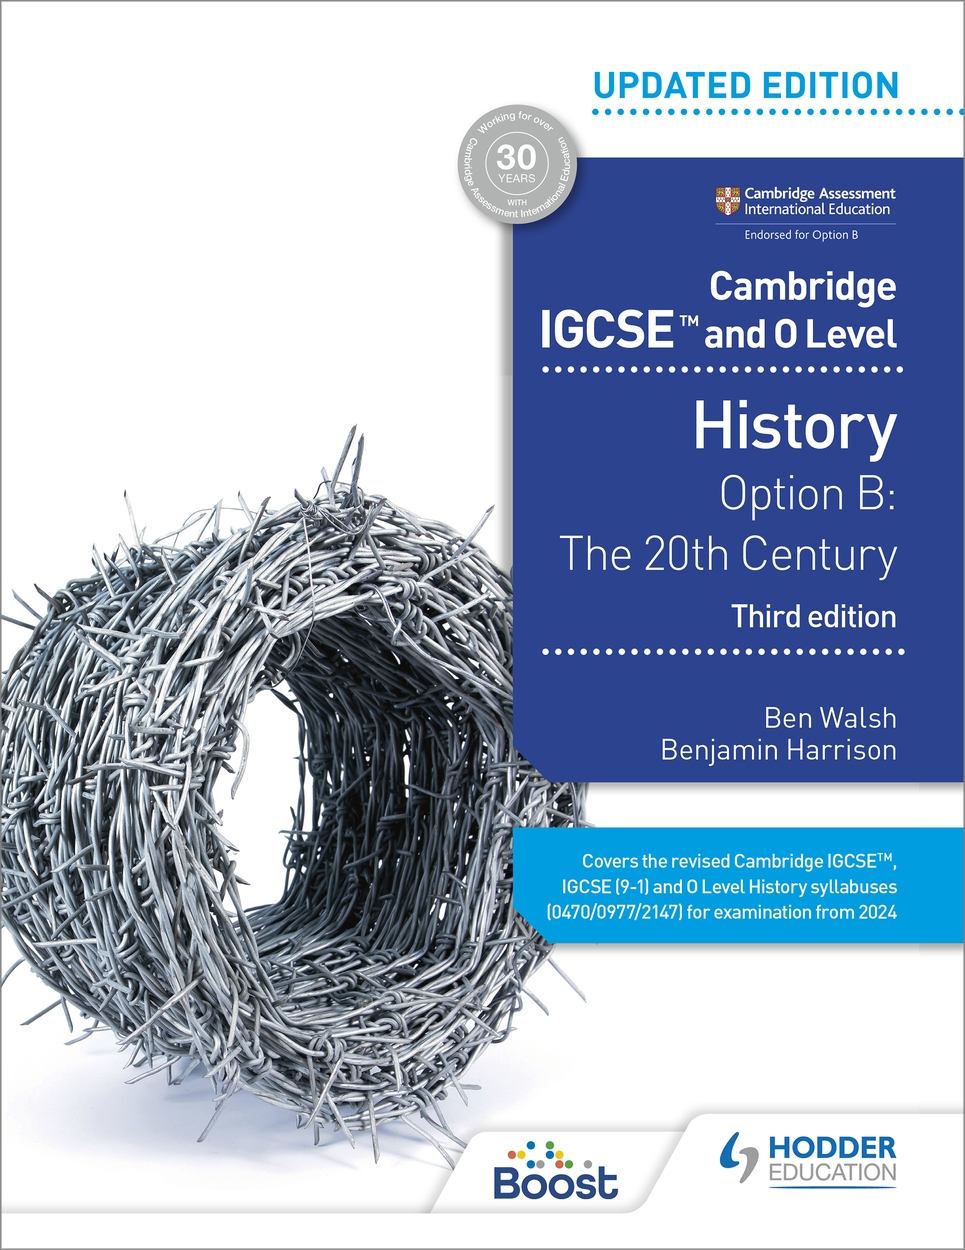 Cambridge IGCSE and O Level History 3rd Edition: Option B: The 